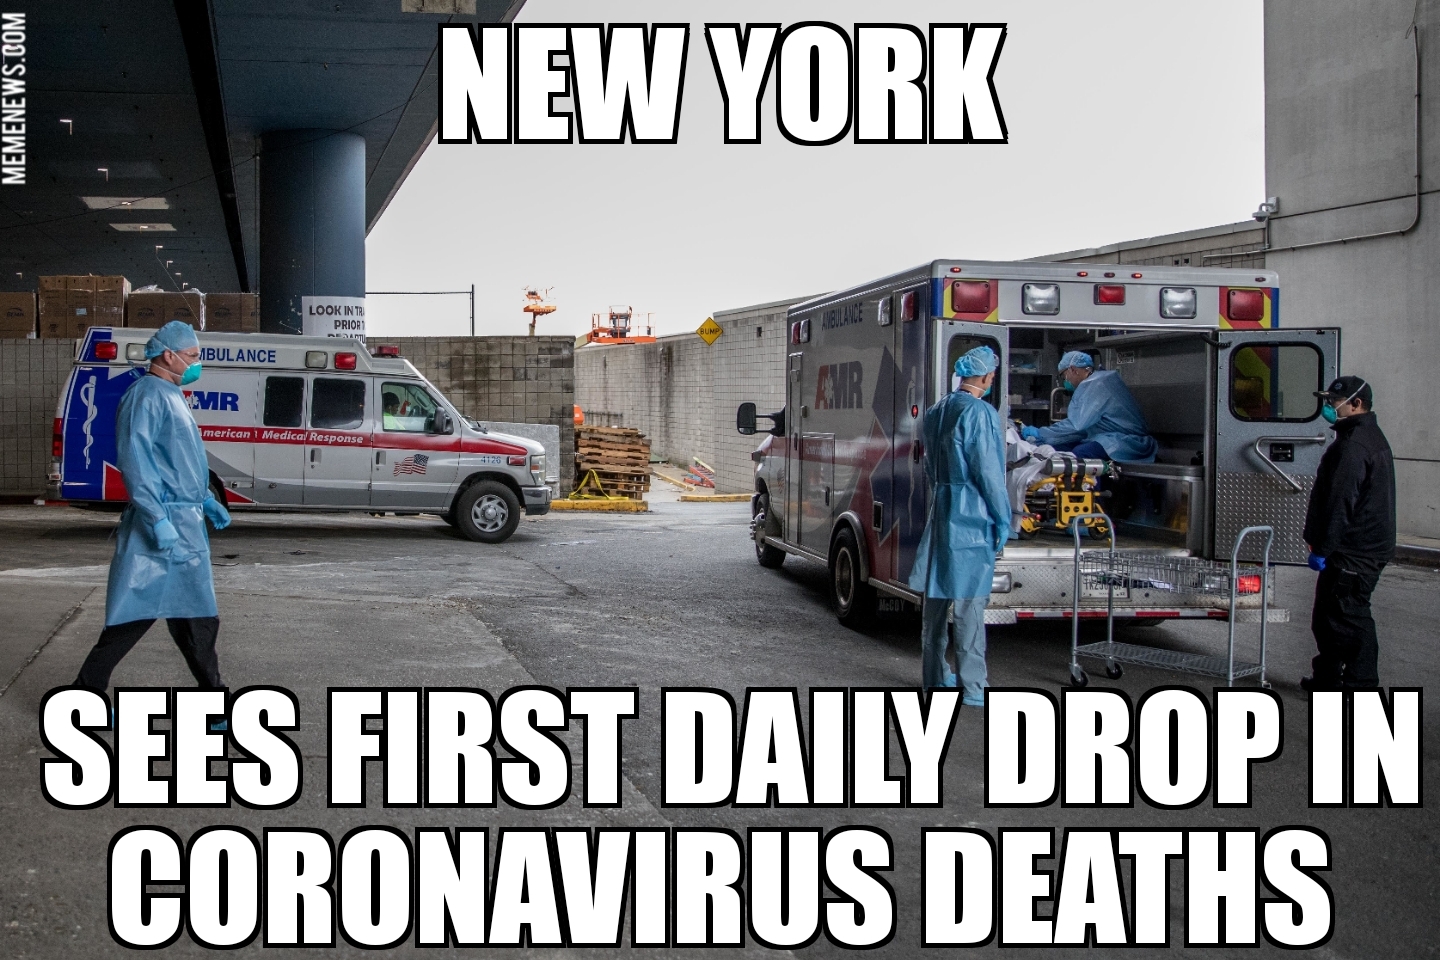 New York sees coronavirus deaths drop